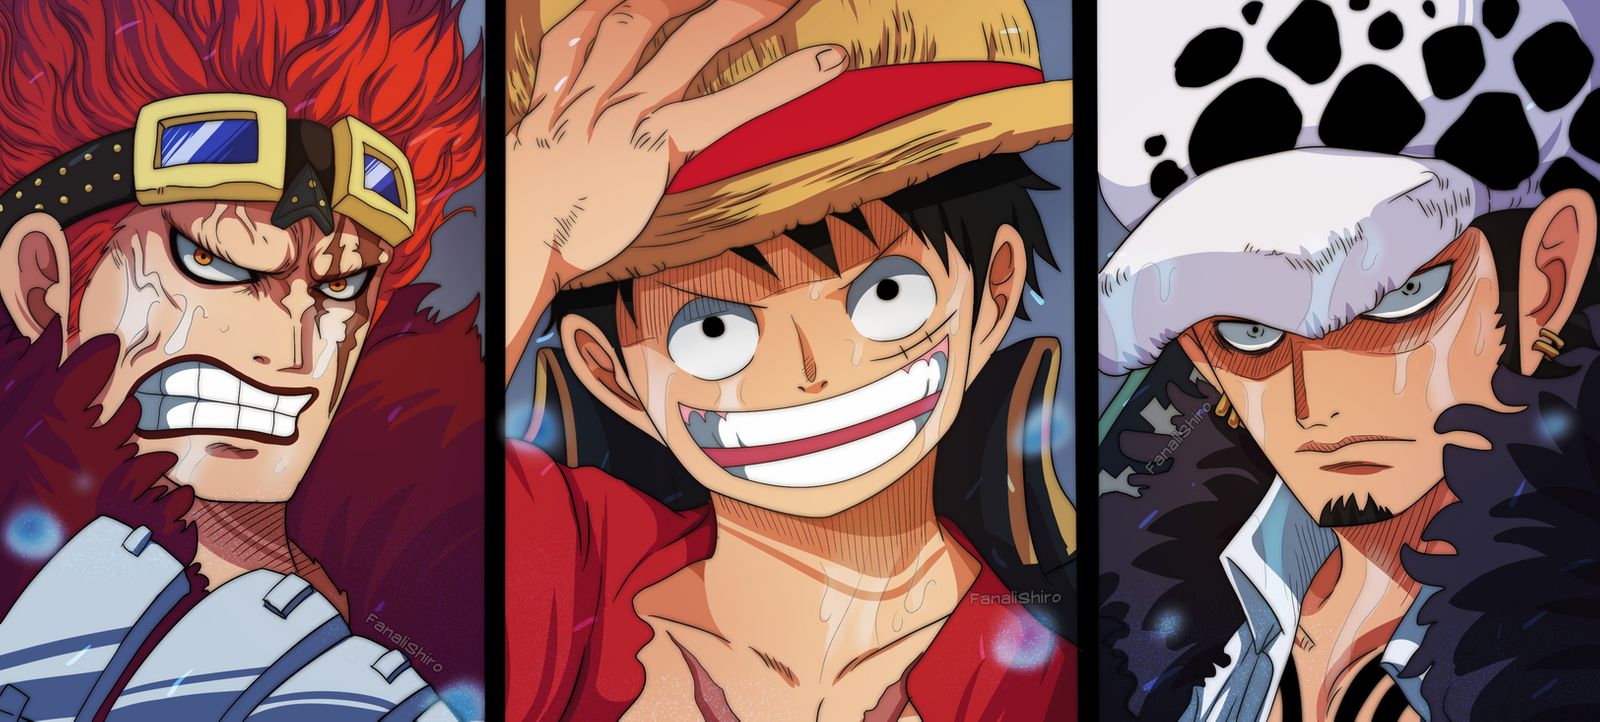 Read One Piece 976 Spoilers, One Piece Manga 976 Raw Scans